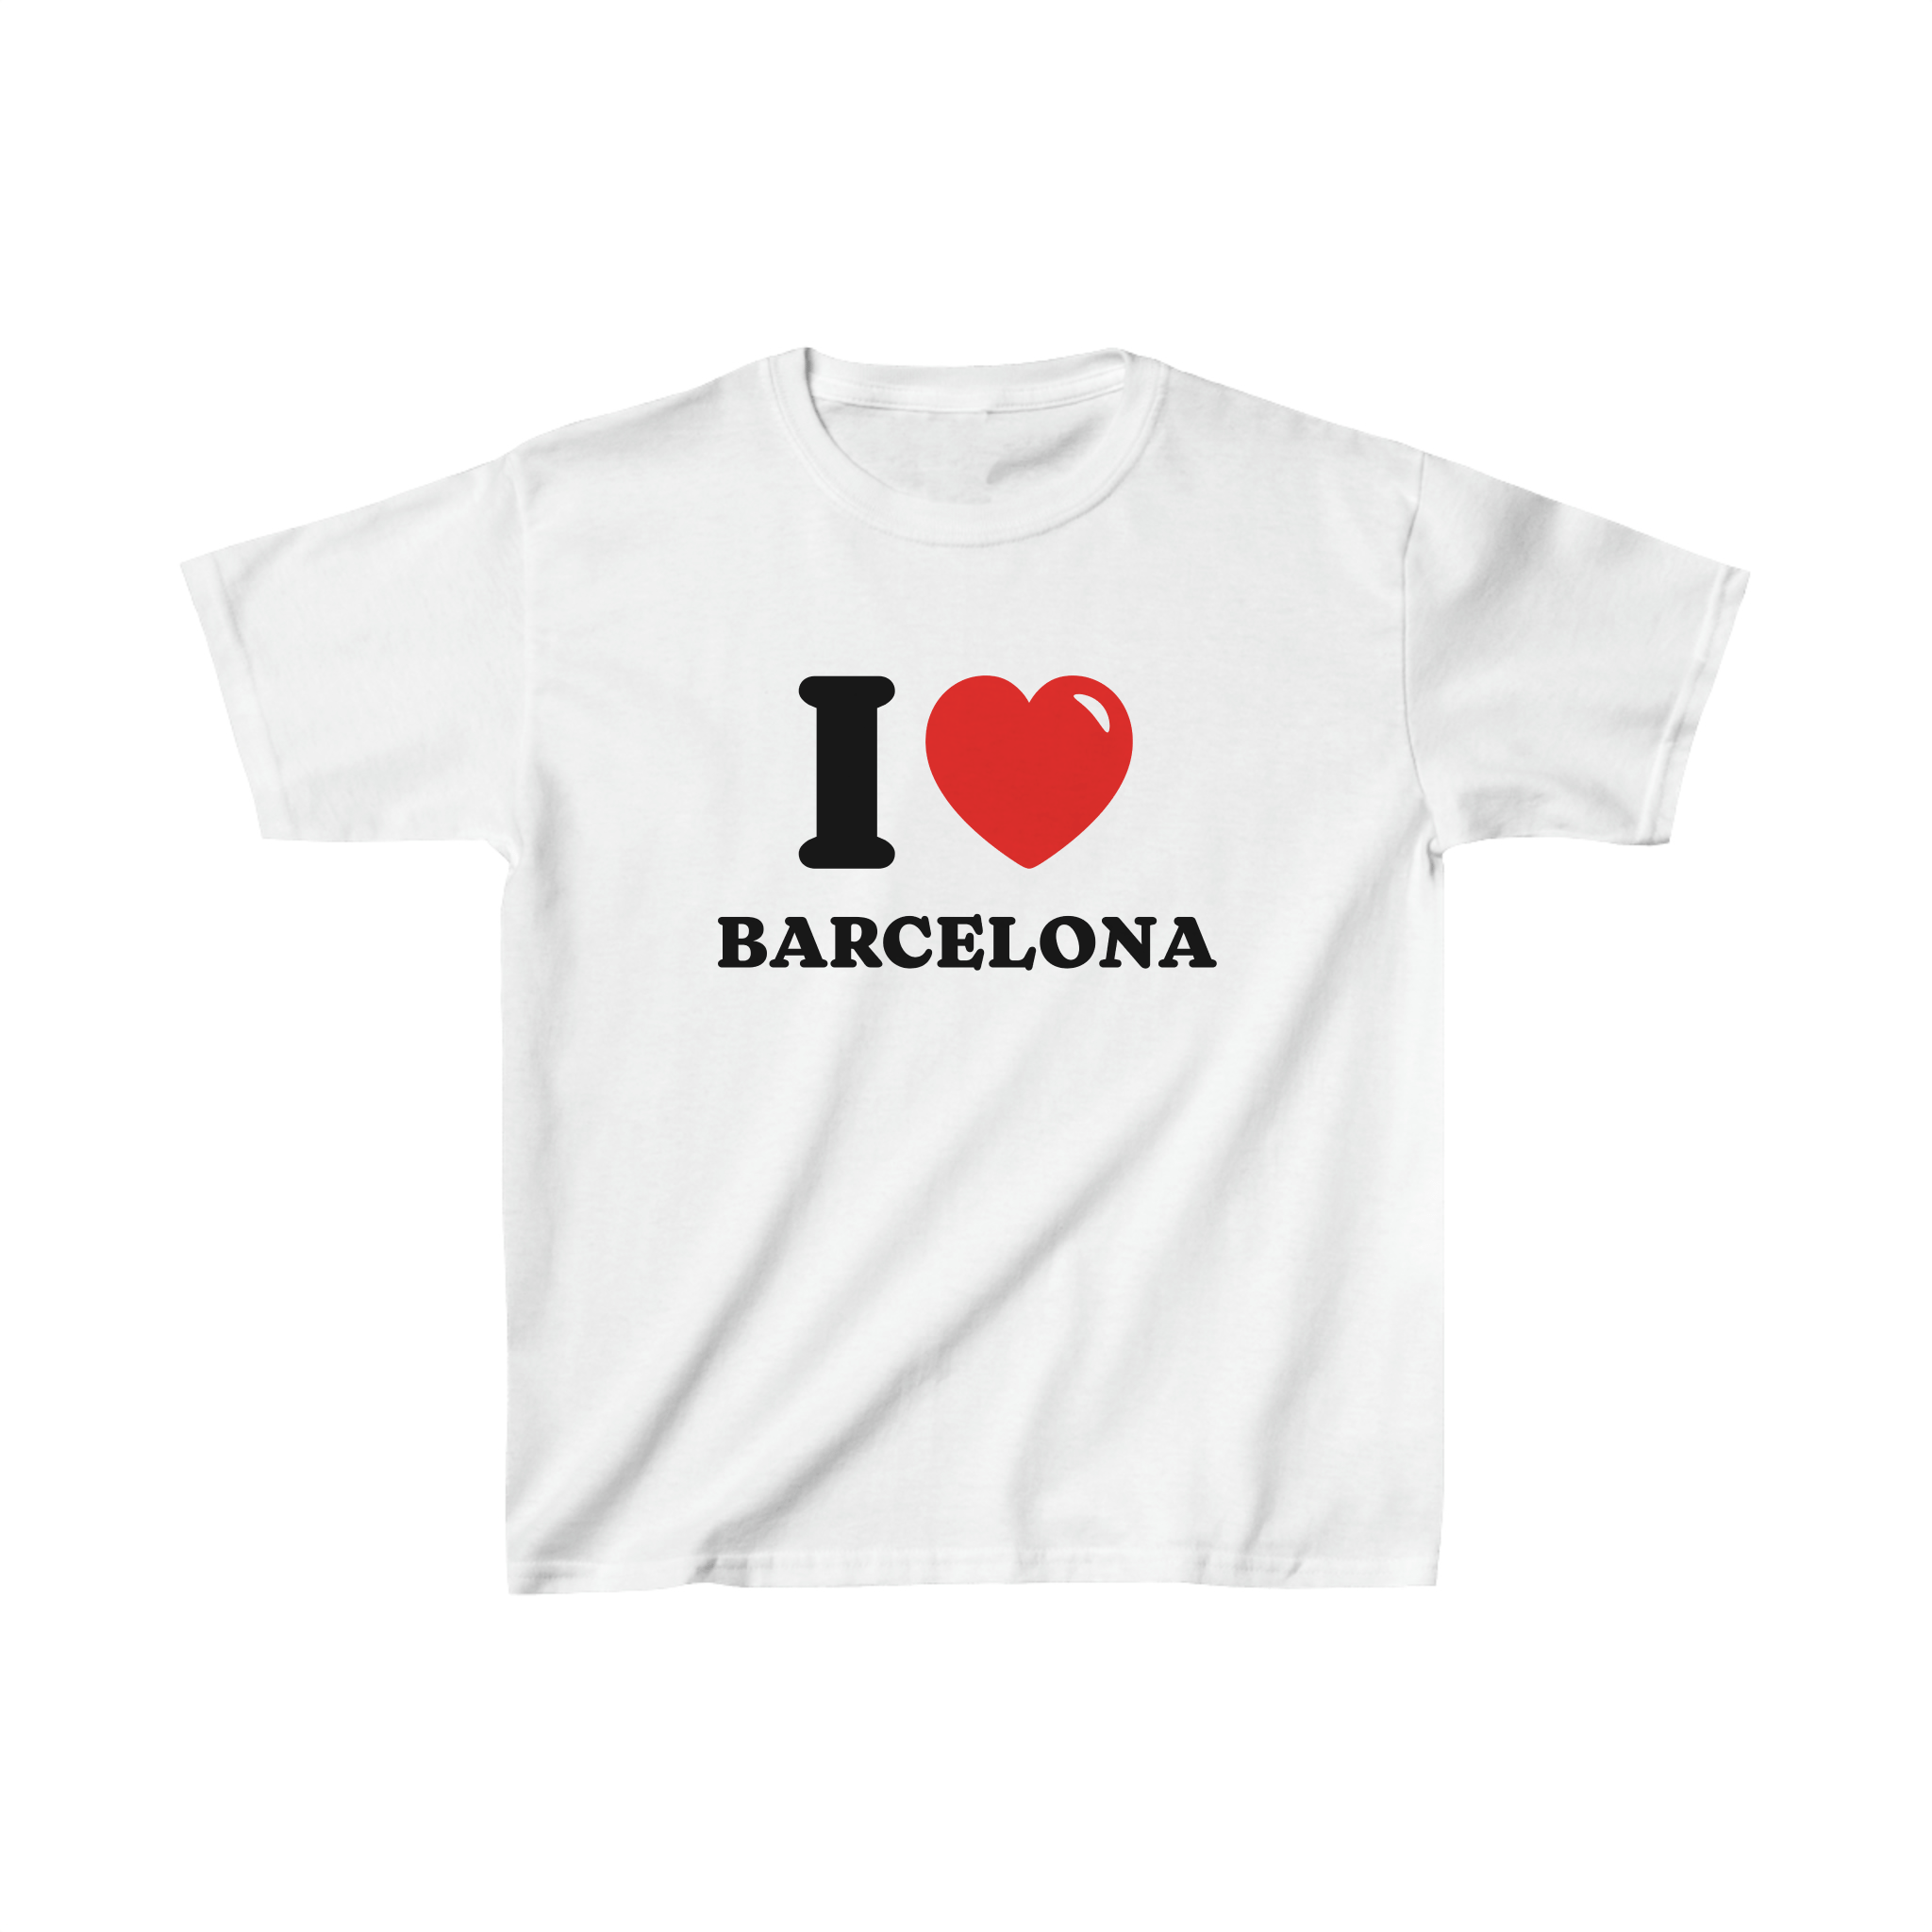 'I love Barcelona' baby tee - In Print We Trust